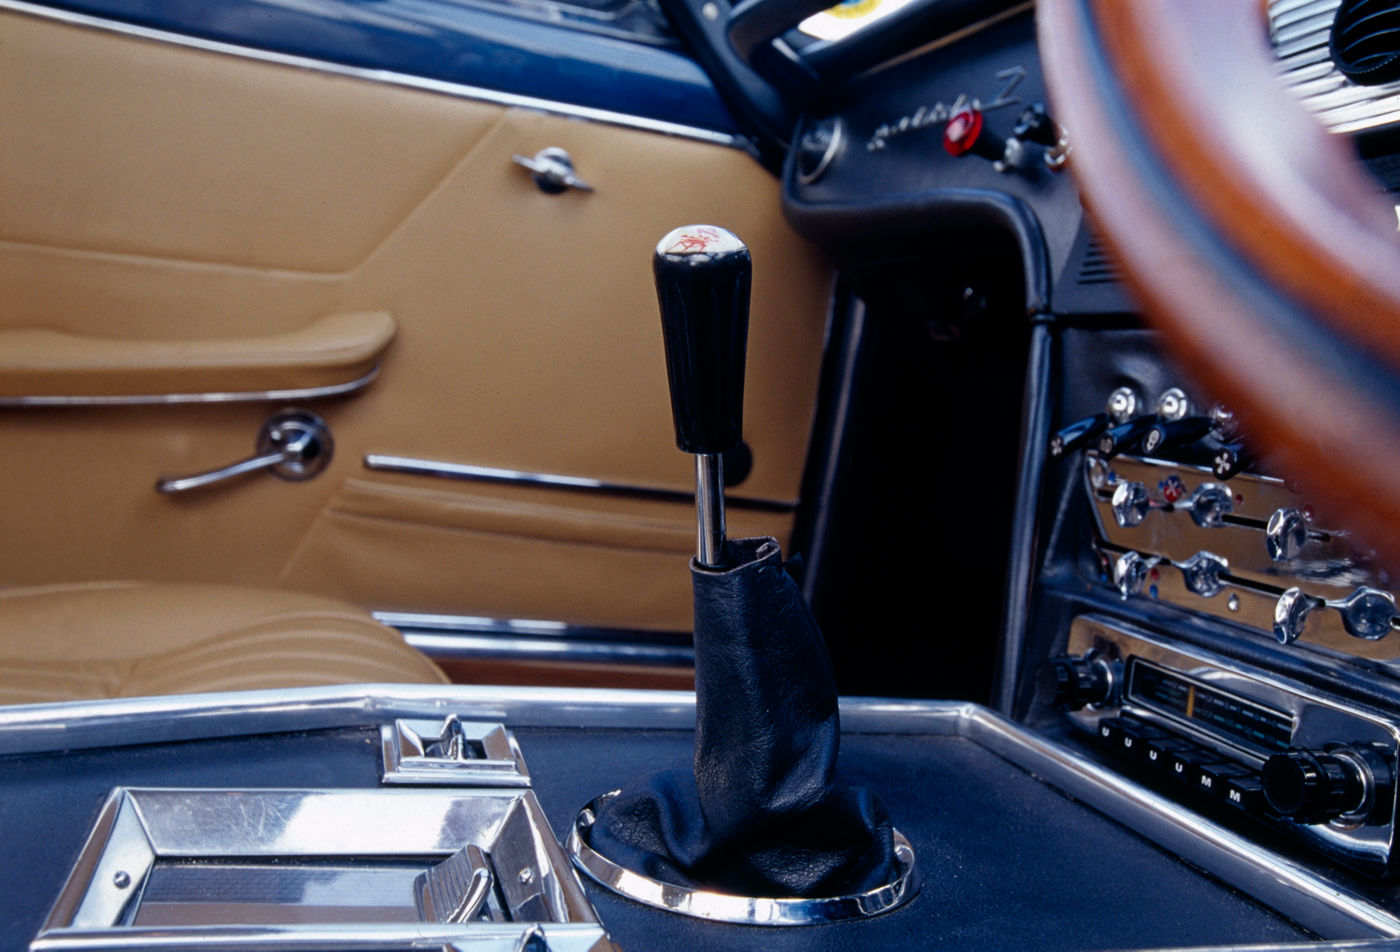 1964 Maserati Sebring - Second Series - interior view of the classic car model